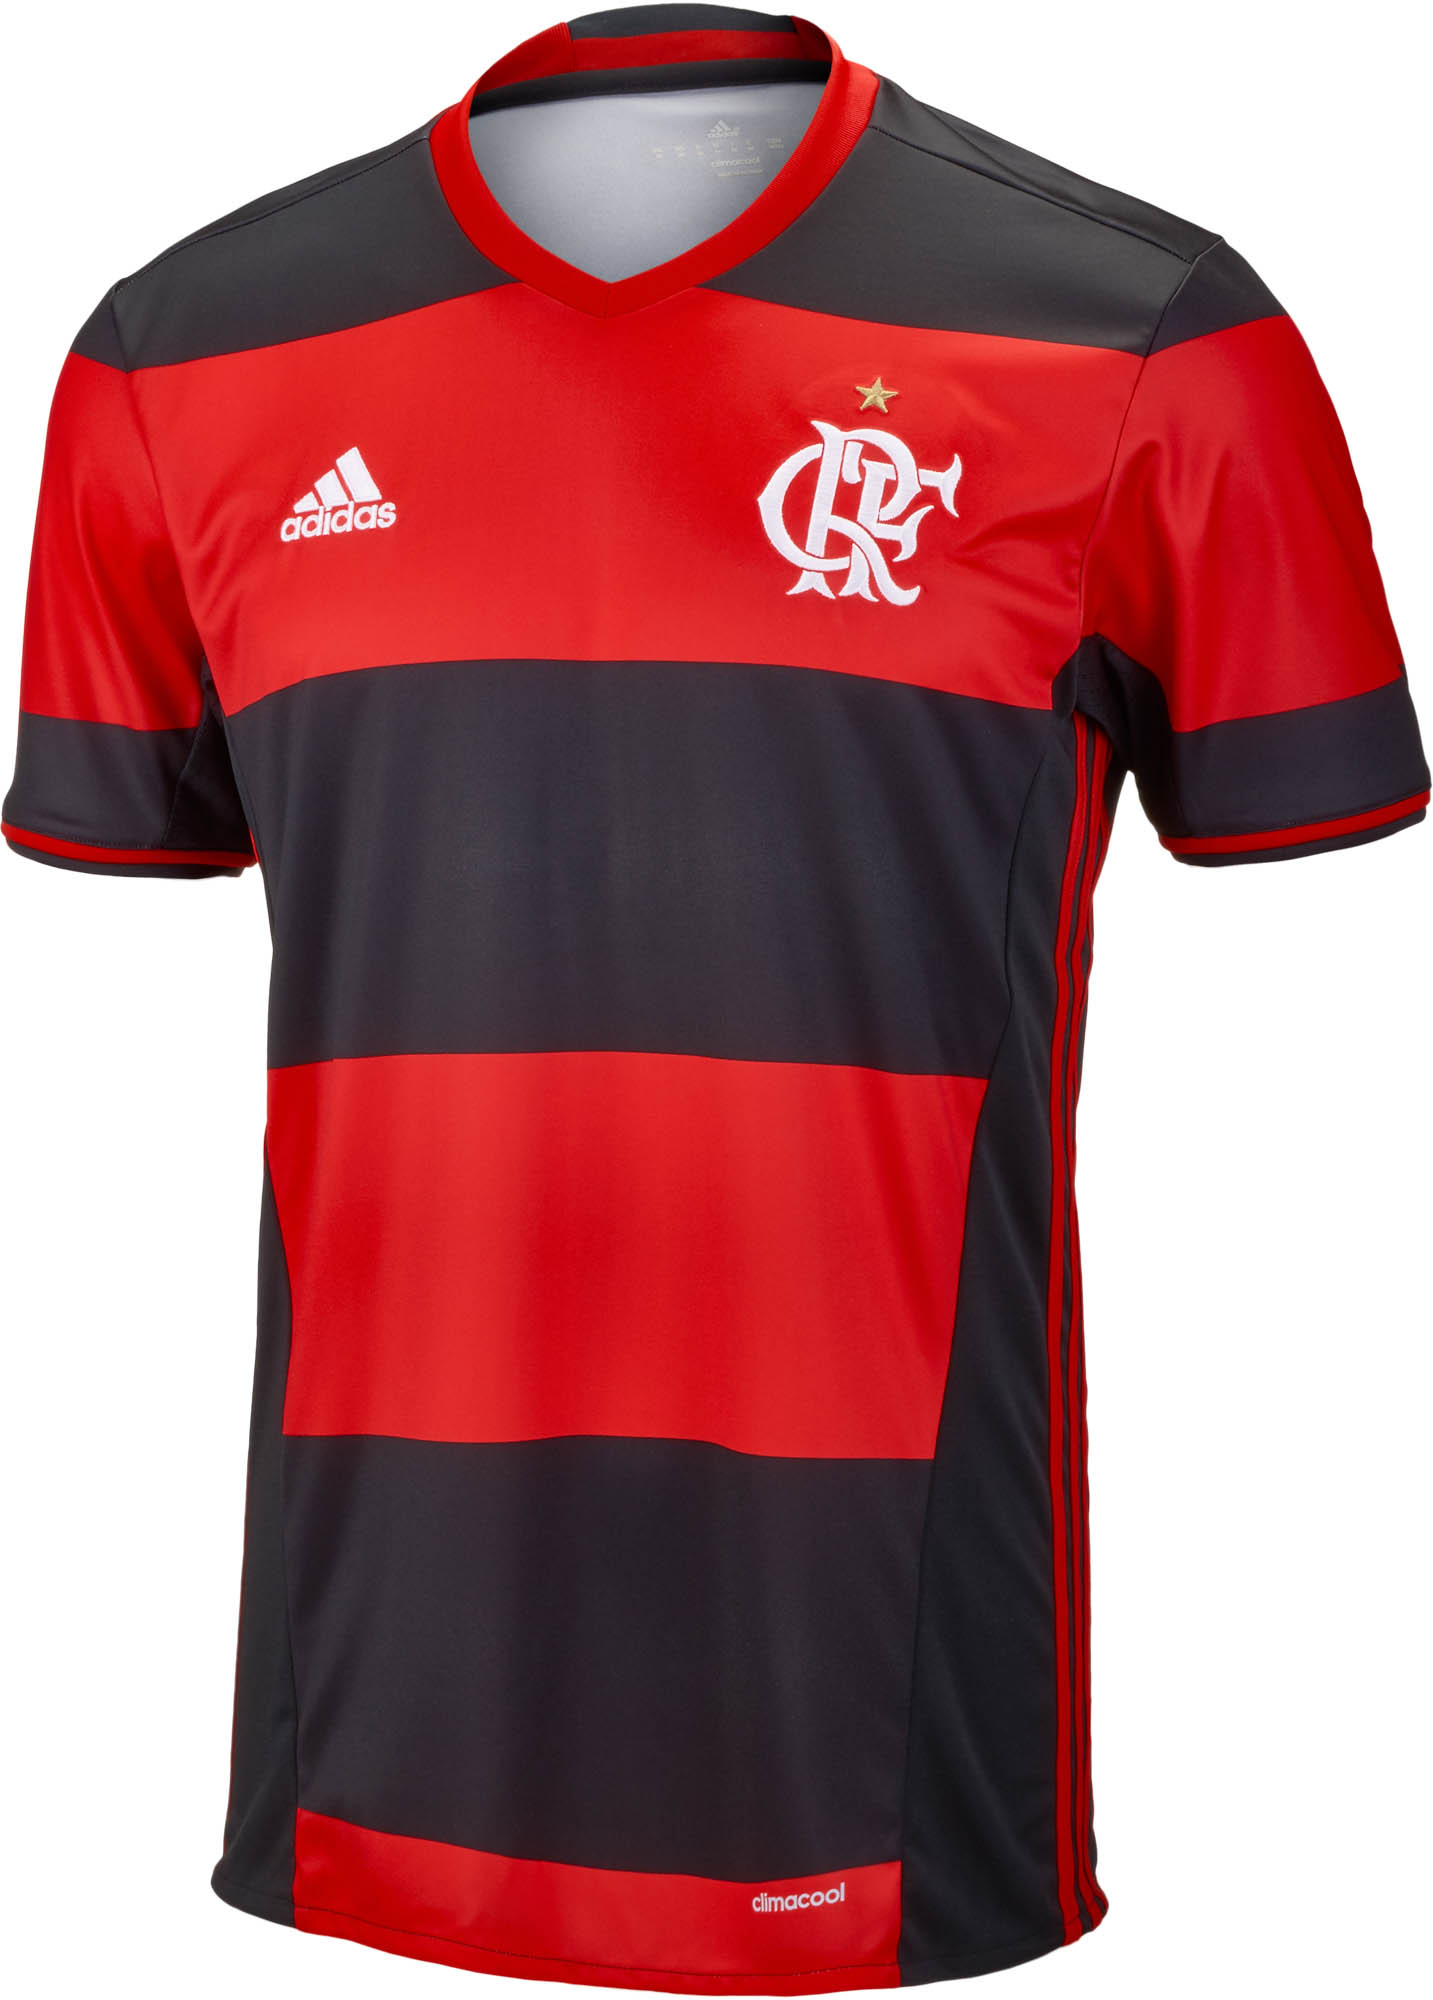 adidas Flamengo Home Jersey - 2016 